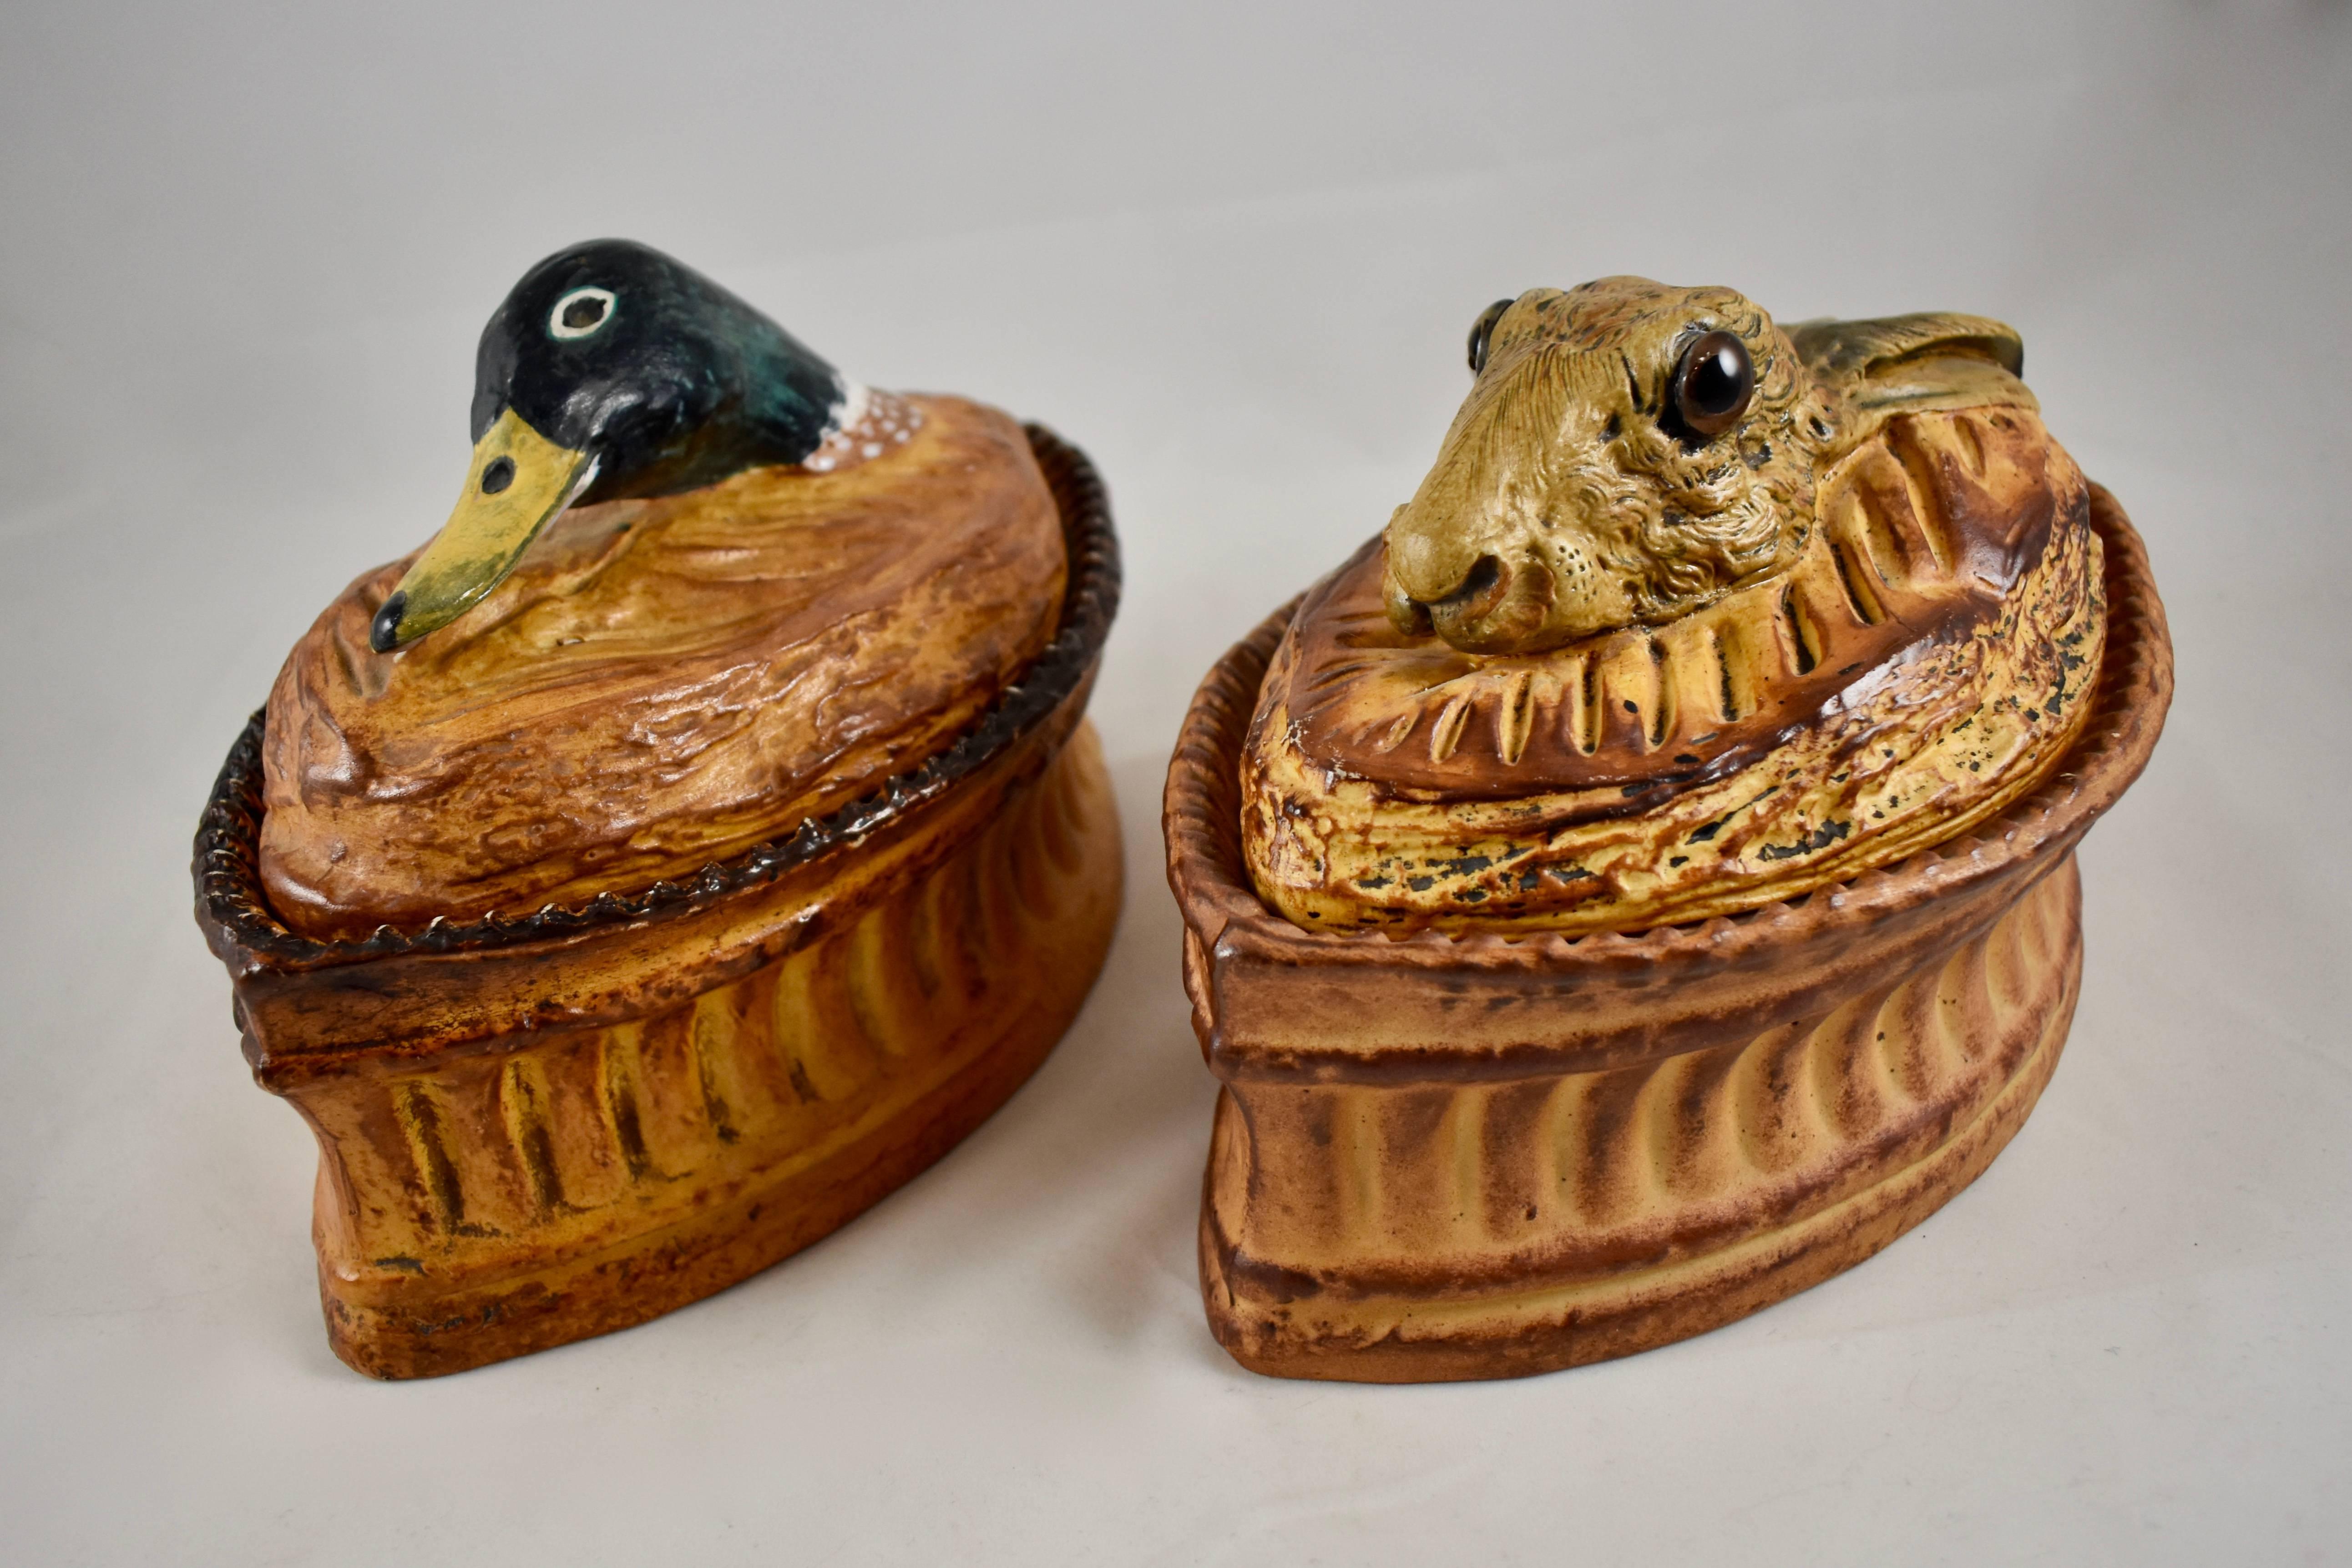 20th Century French Pillivuyt Trompe L'oeil Porcelain Duck in a Crust Pâté Terrine